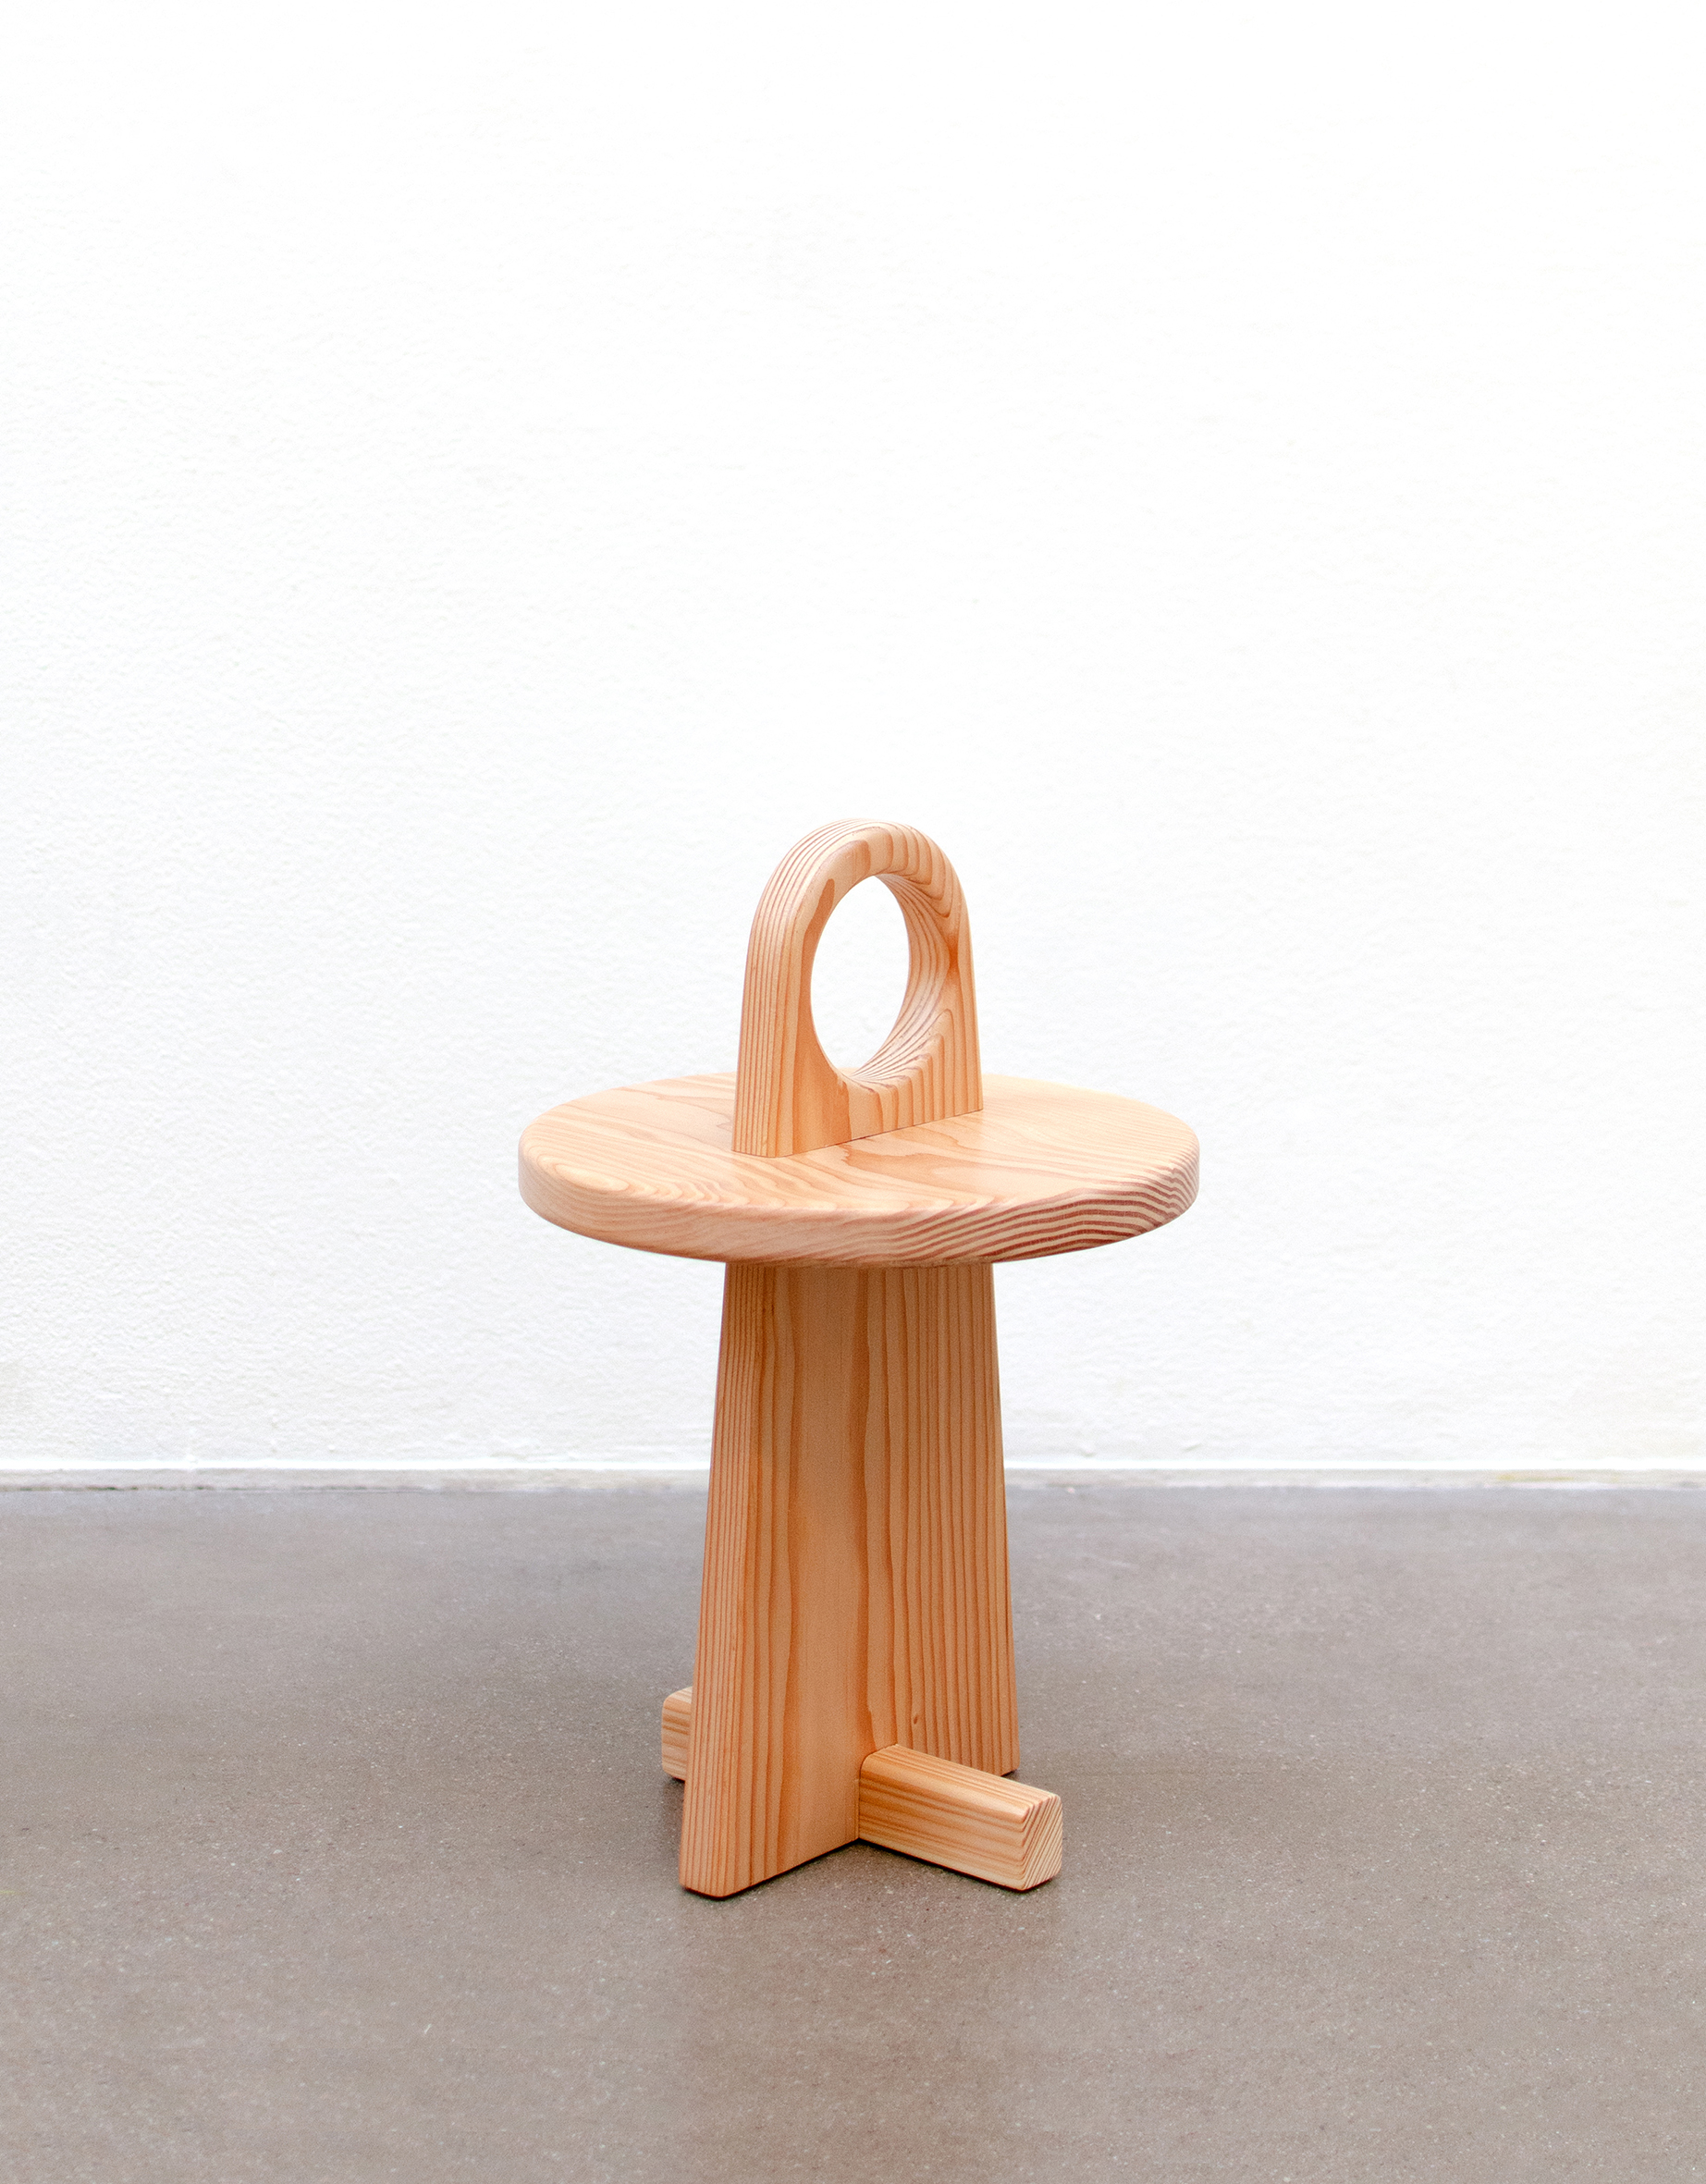  ‘Nest’ side table by Daniel Svahn. 